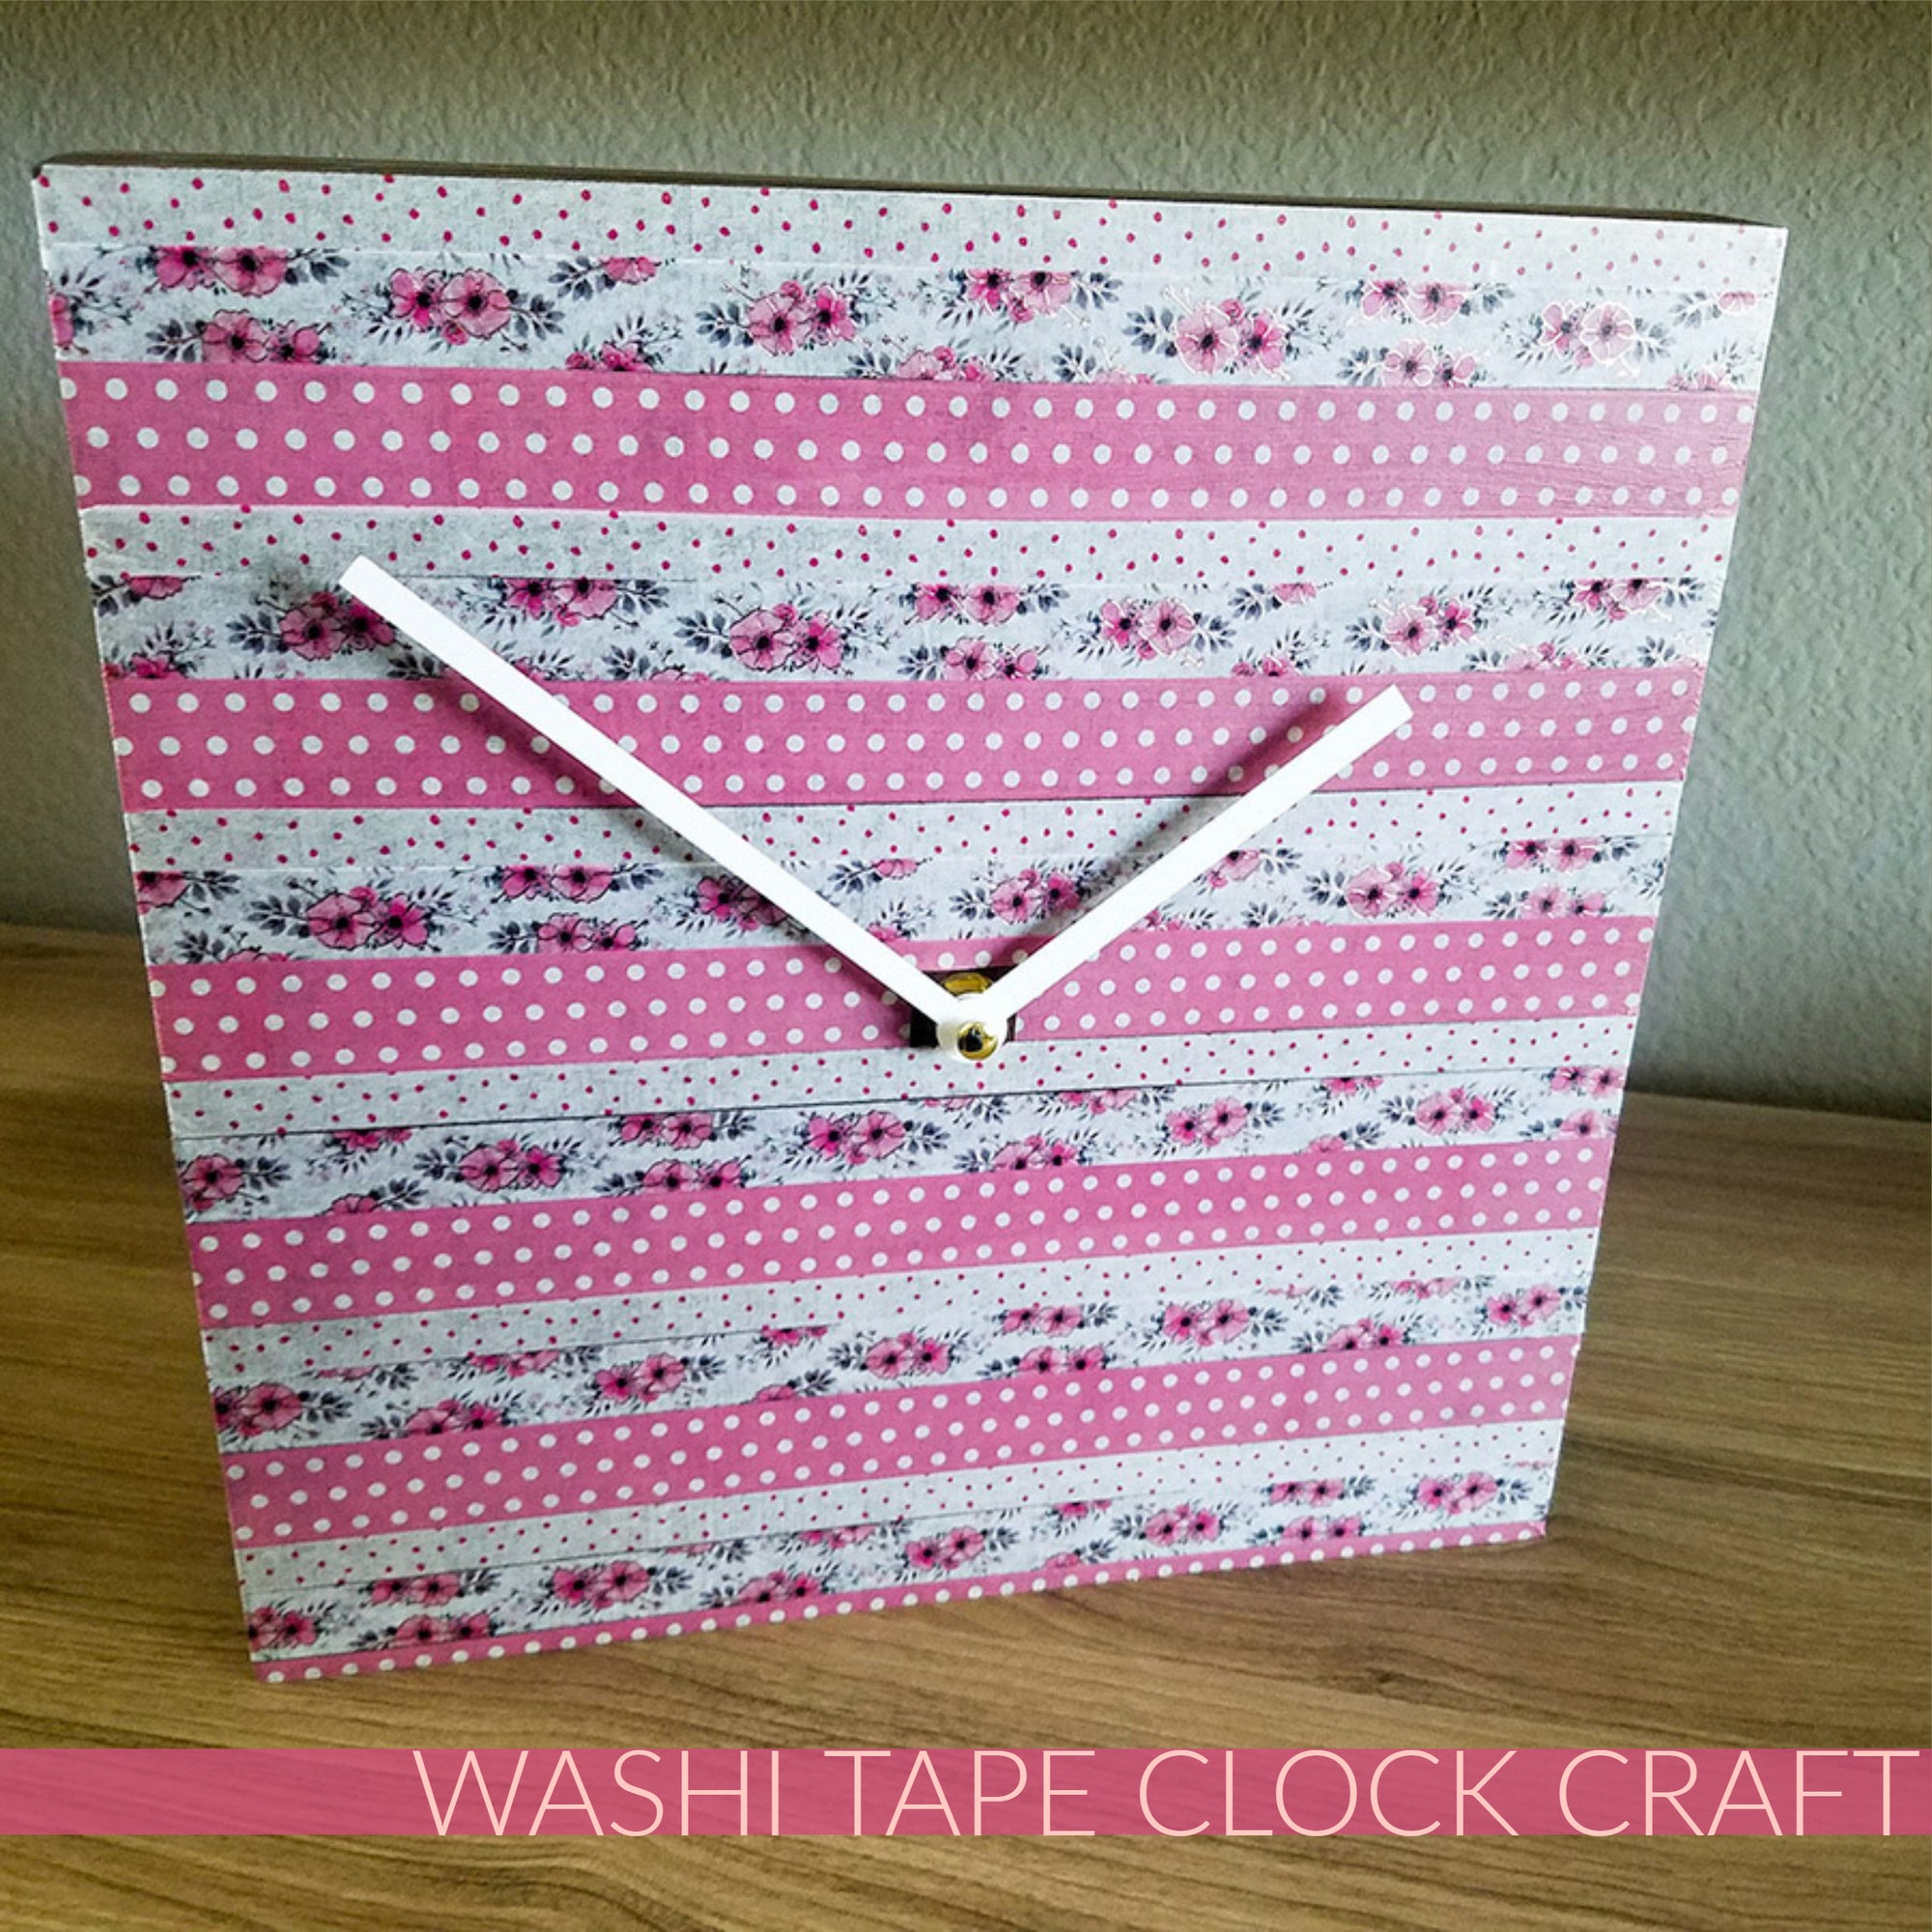 DIY Washi Tape Clock Tutorial - So Easy!